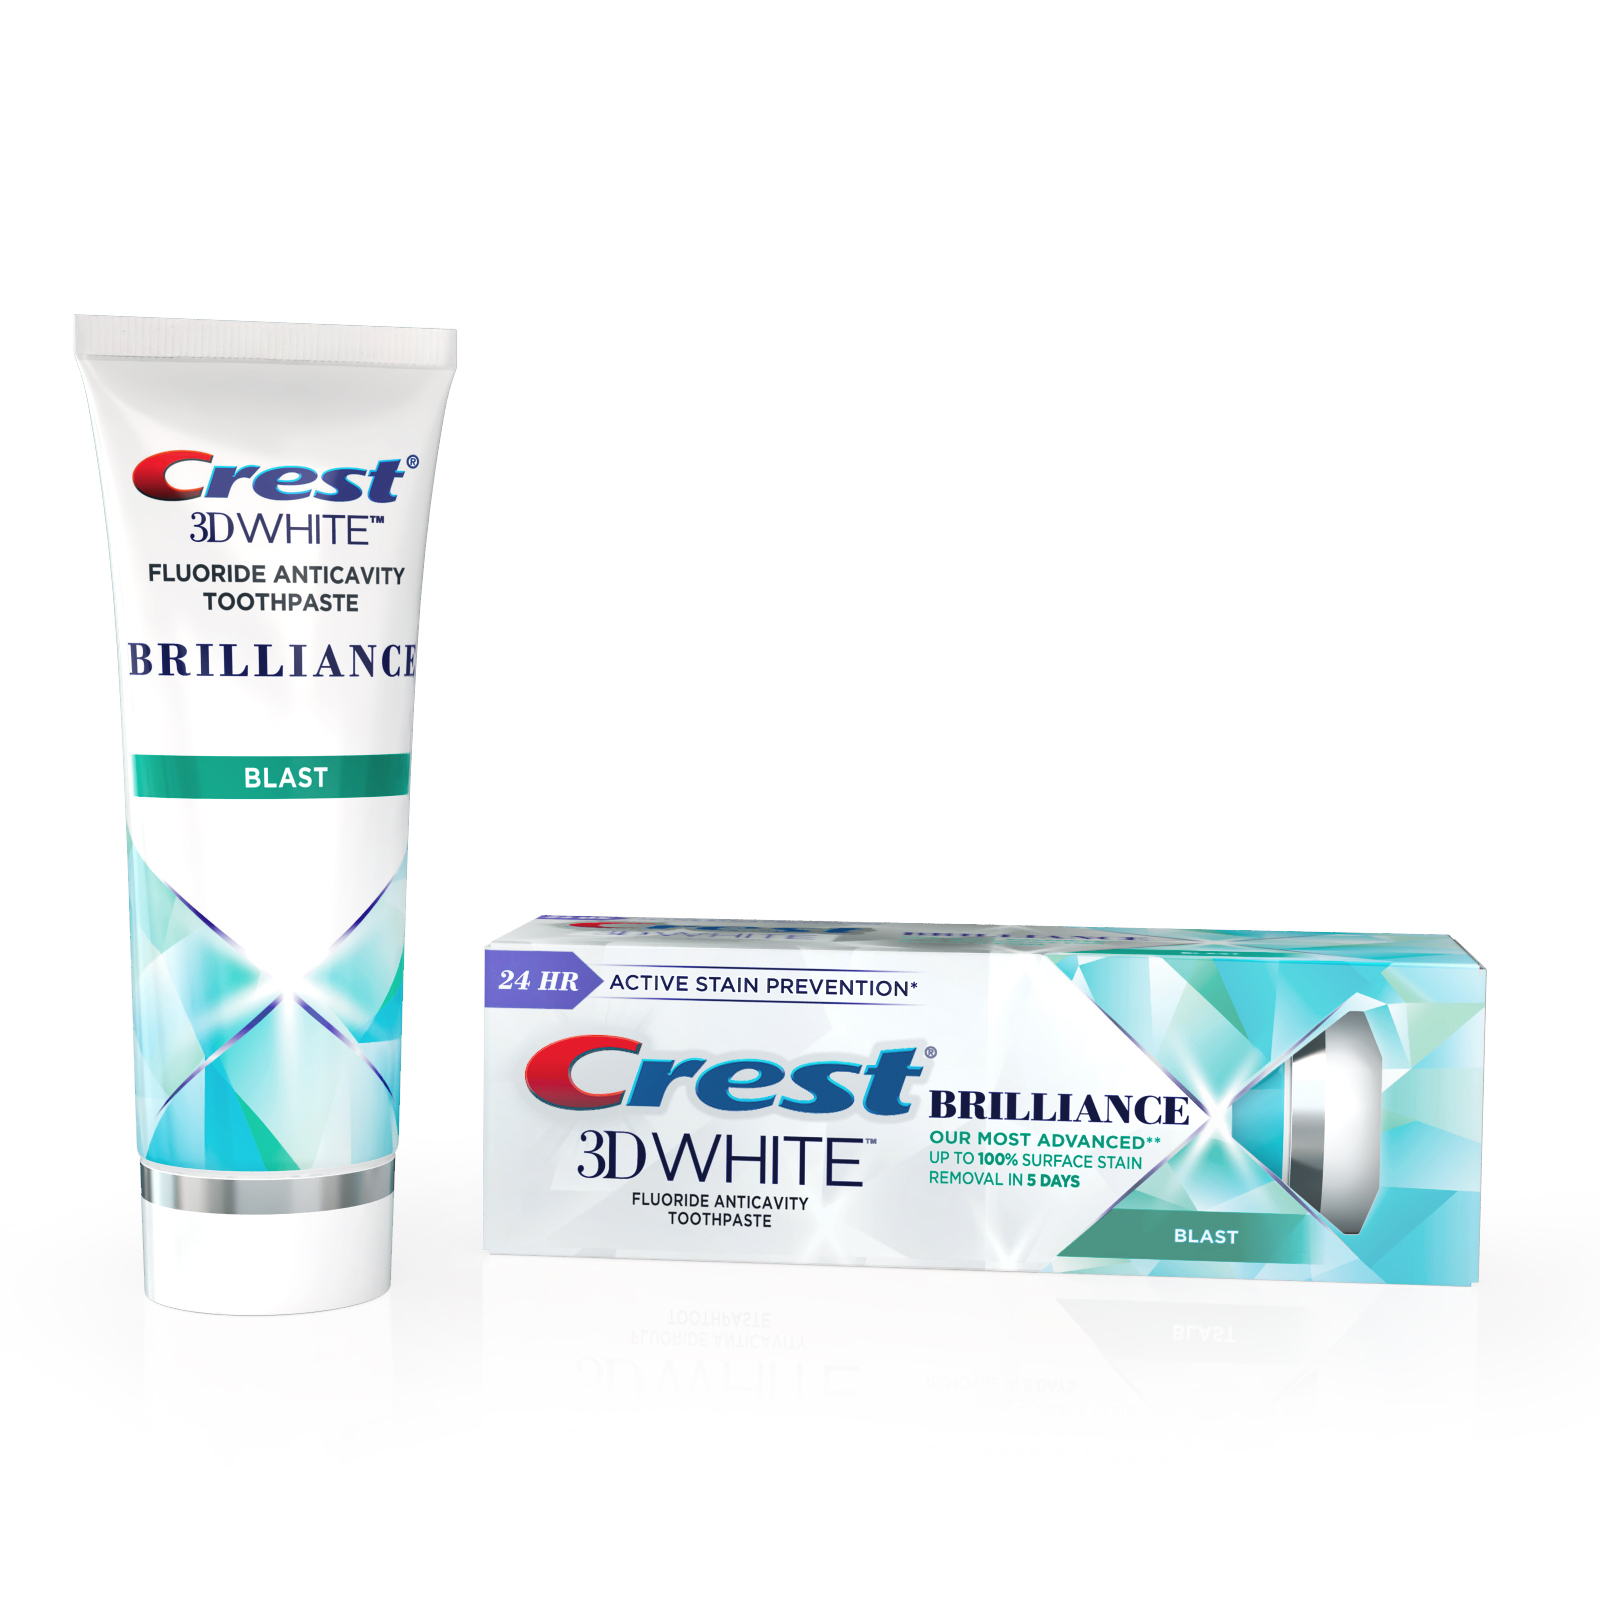 Crest 3D White Brilliance Blast Toothpaste, 3.9 oz - image 1 of 11